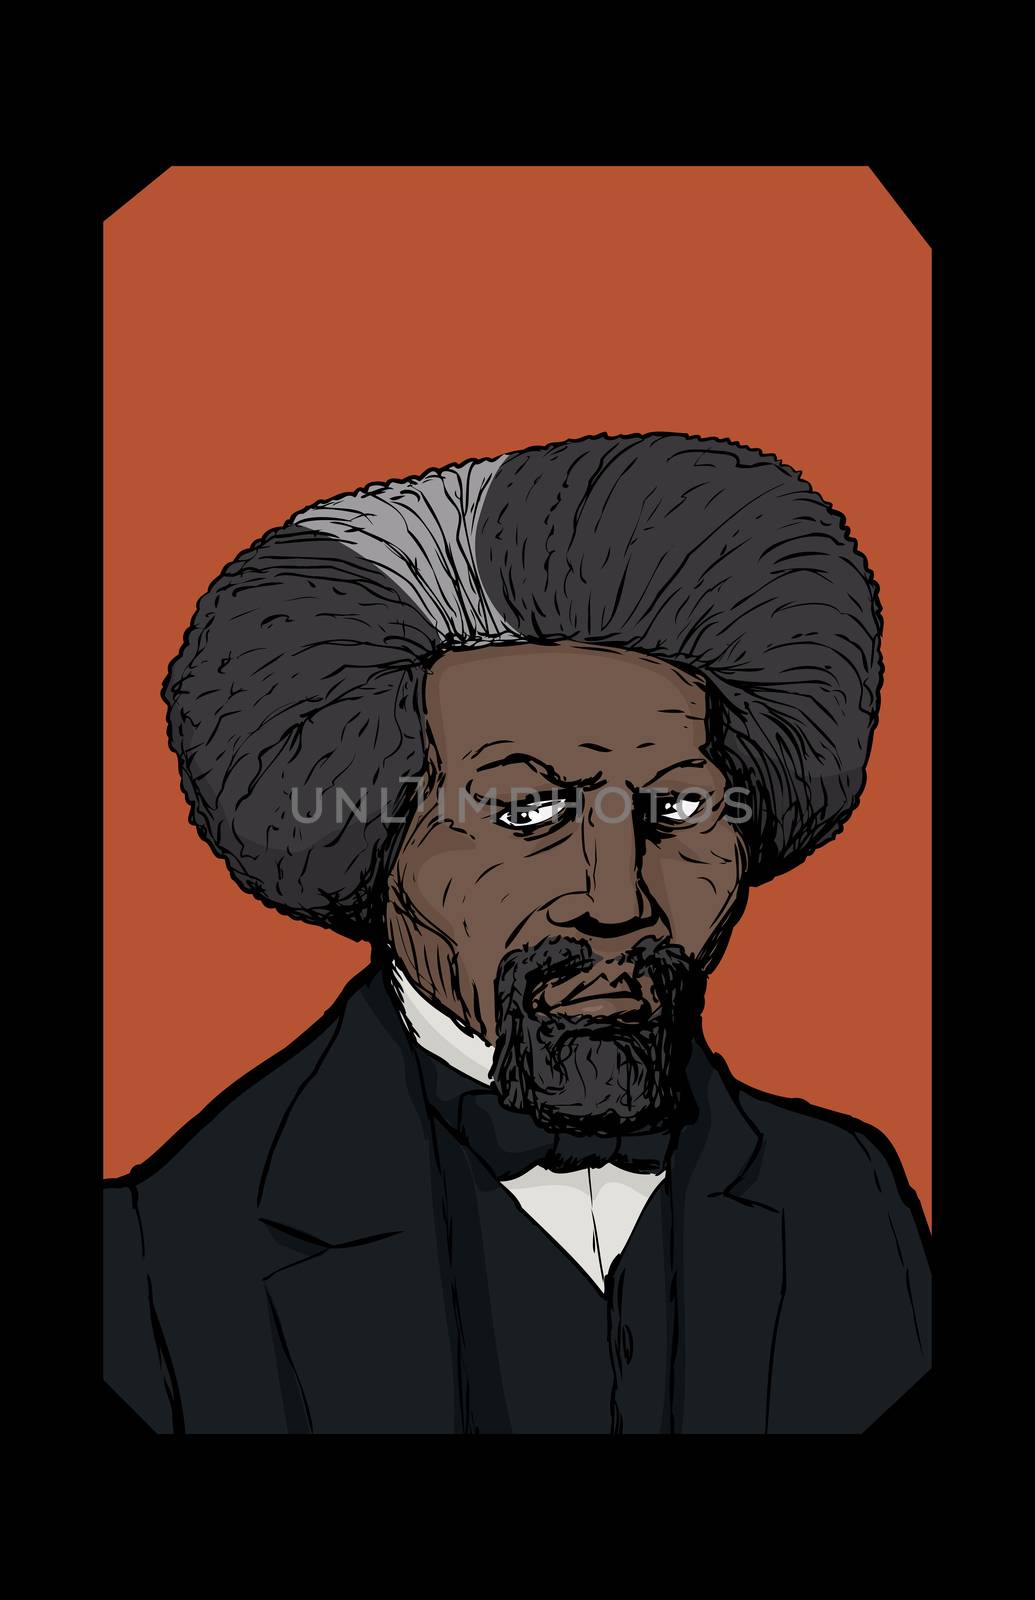 Color sketch portrait of famous African American leader named Frederick Douglass in frame over orange background